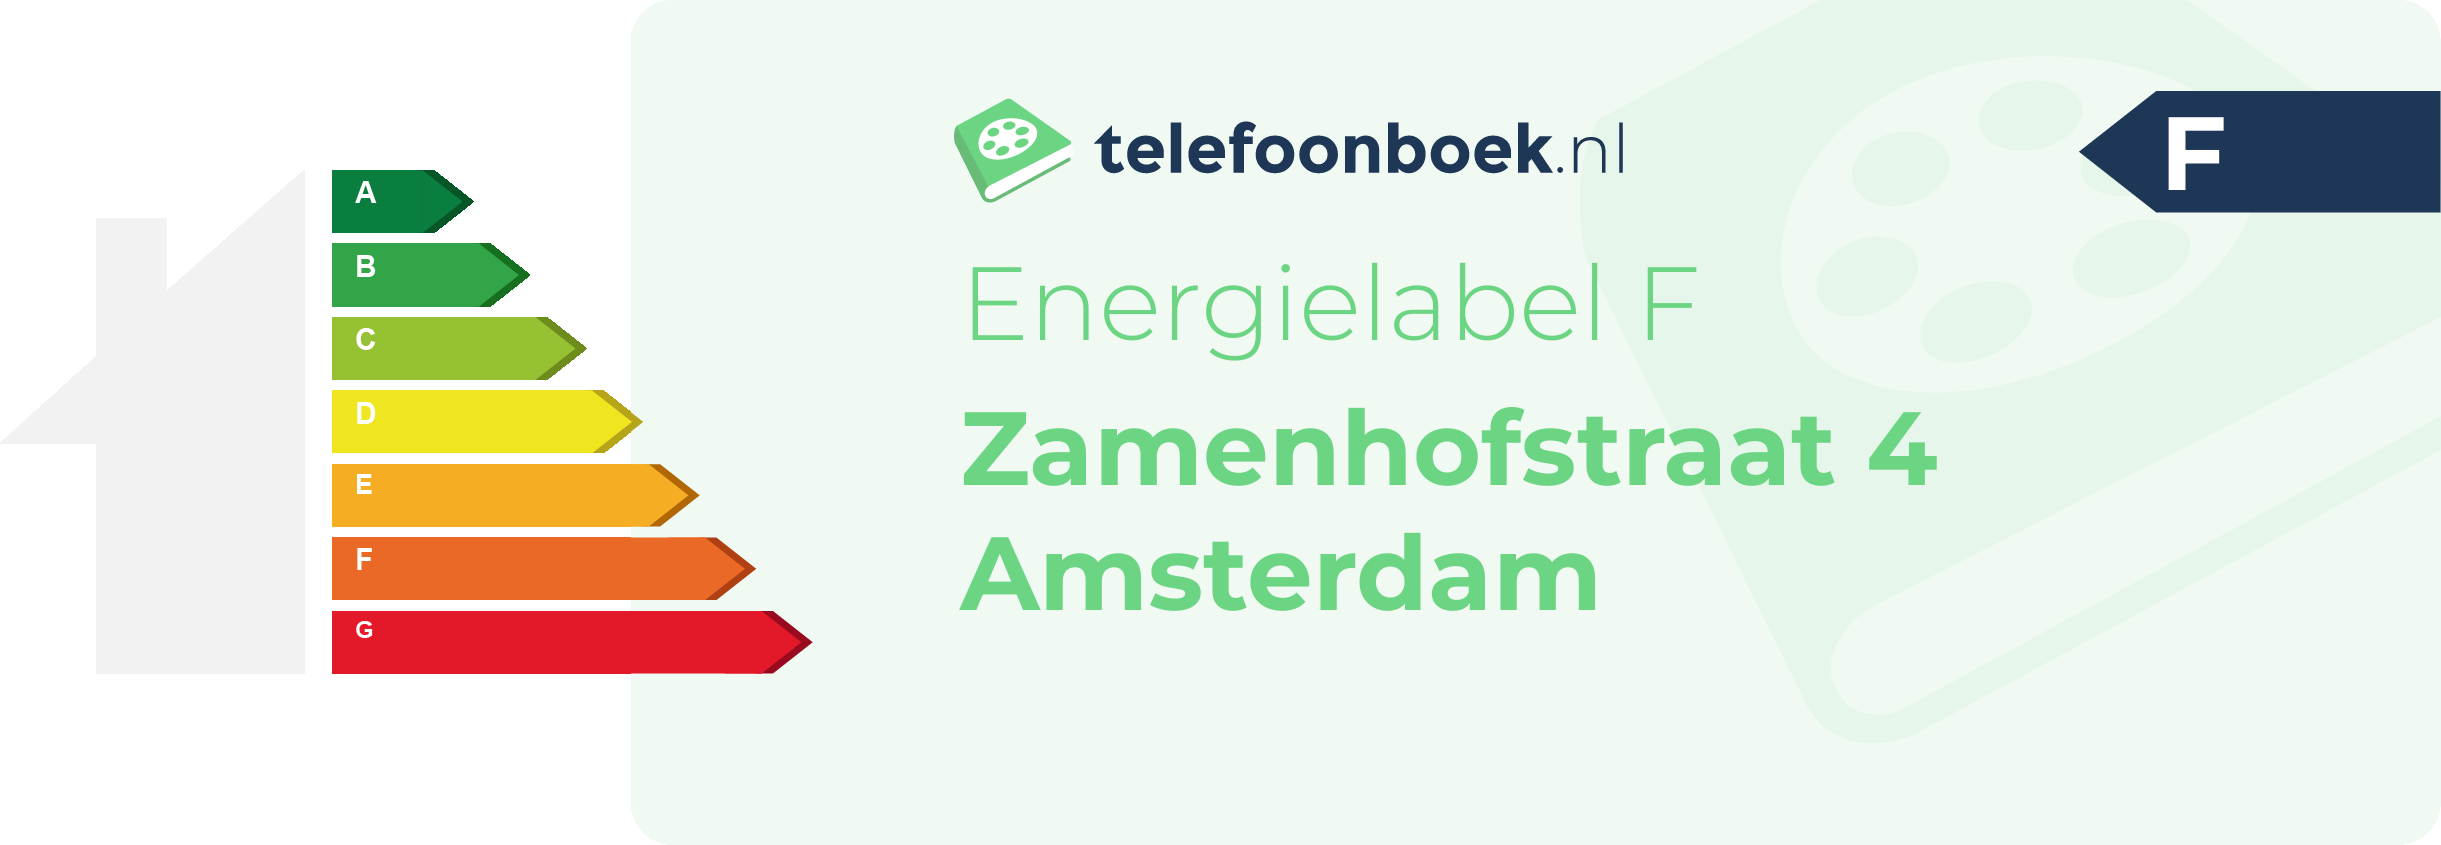 Energielabel Zamenhofstraat 4 Amsterdam